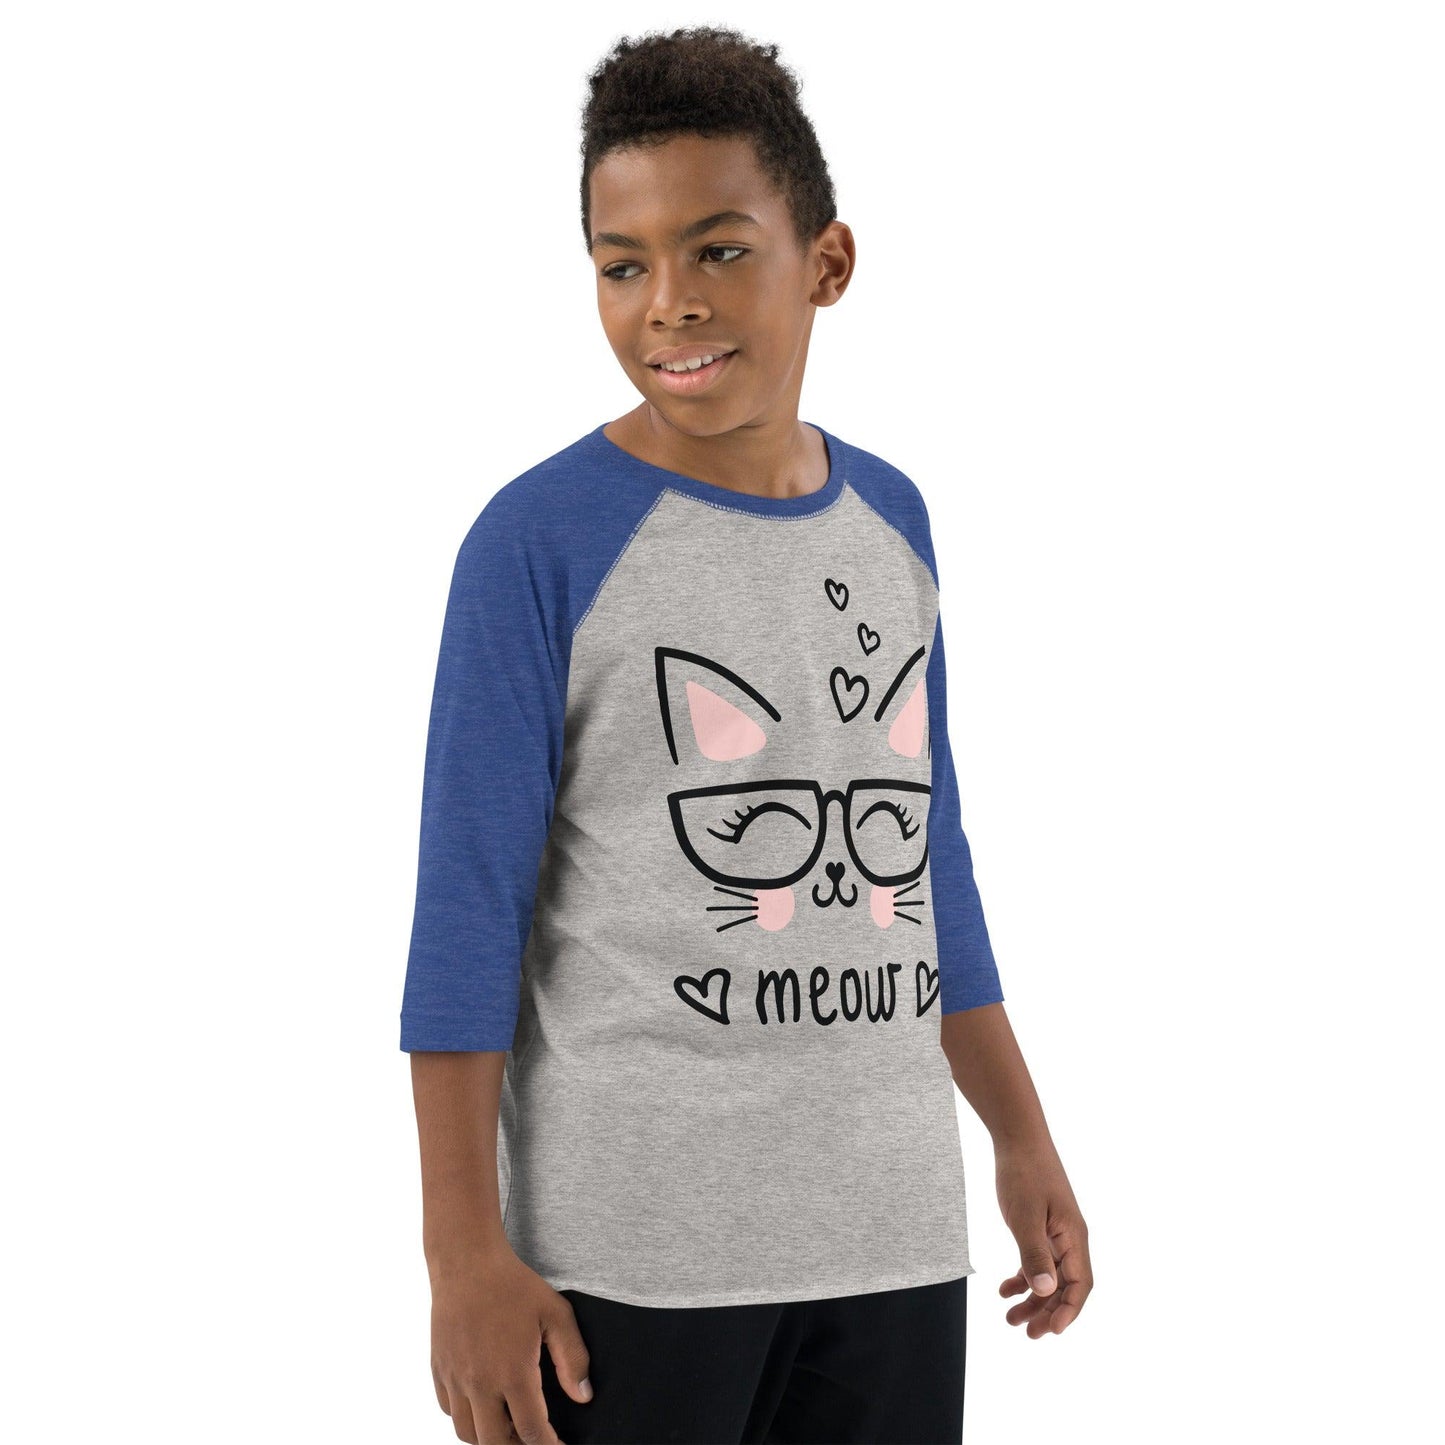 Meow The Cat Youth baseball shirt - L & M Kee, LLC